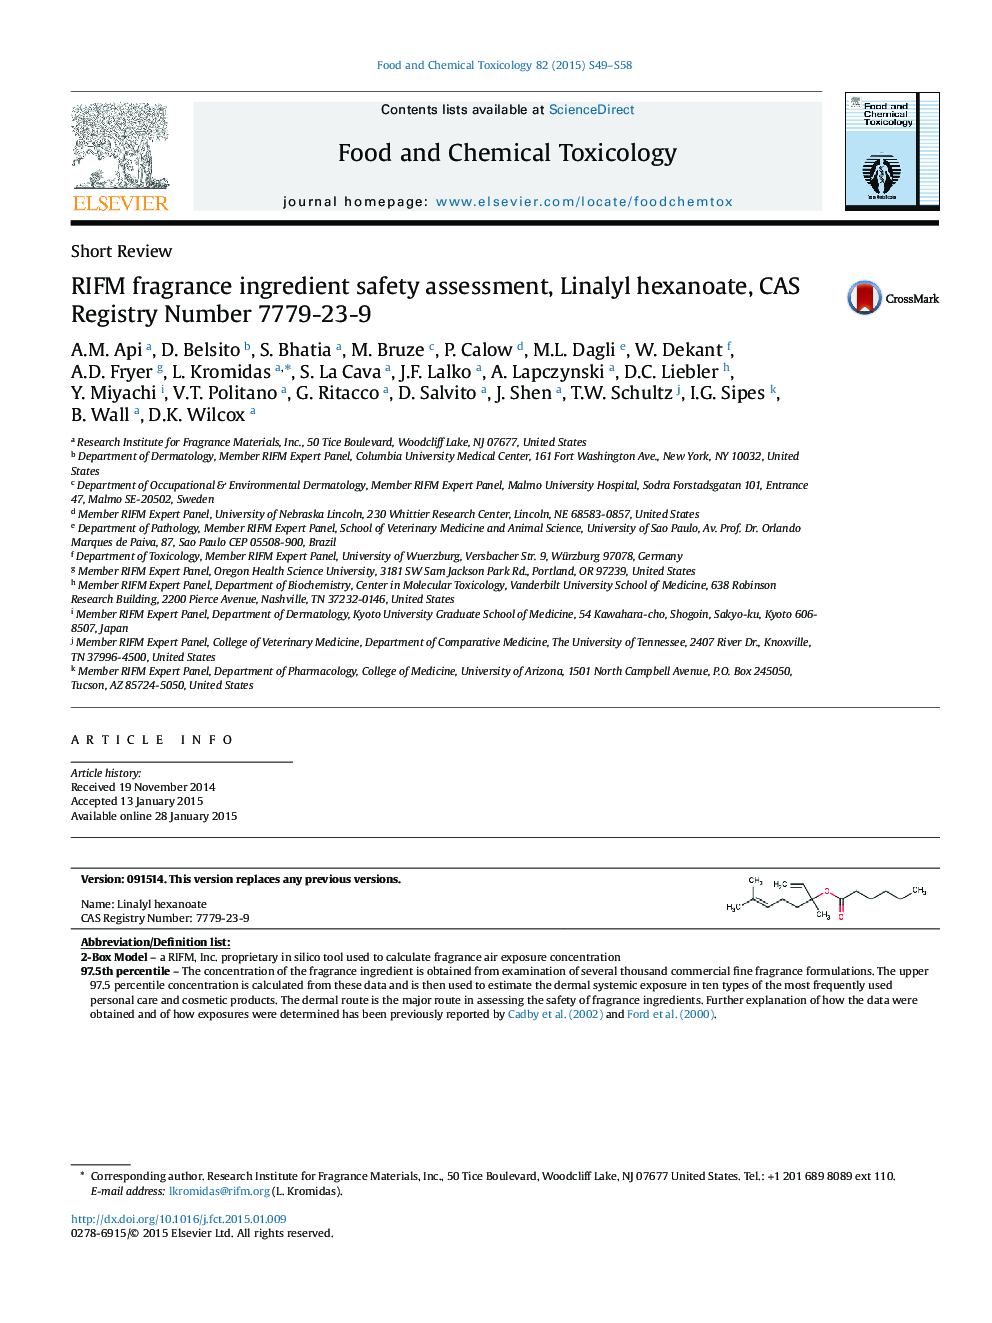 RIFM fragrance ingredient safety assessment, Linalyl hexanoate, CAS Registry Number 7779-23-9